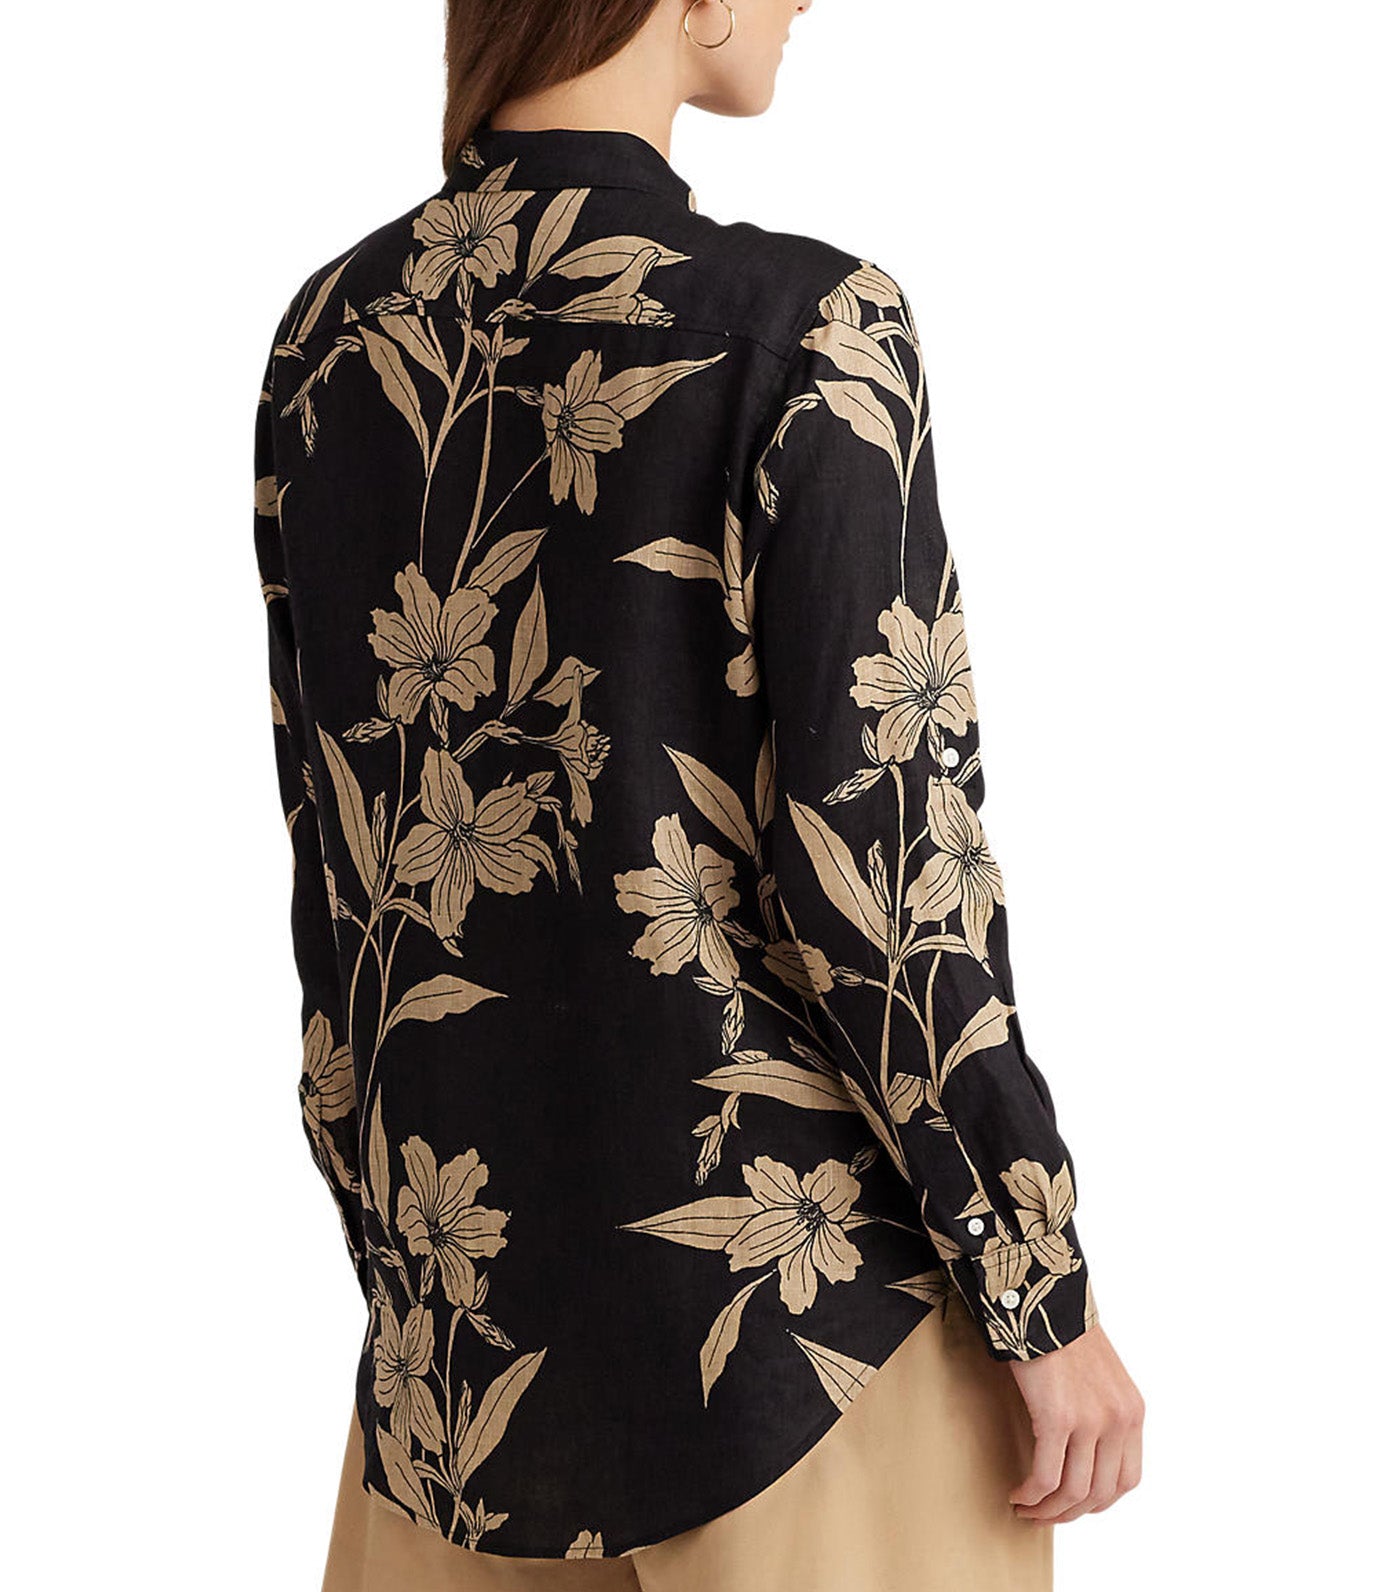 Women's Floral Linen Shirt Black/Tan